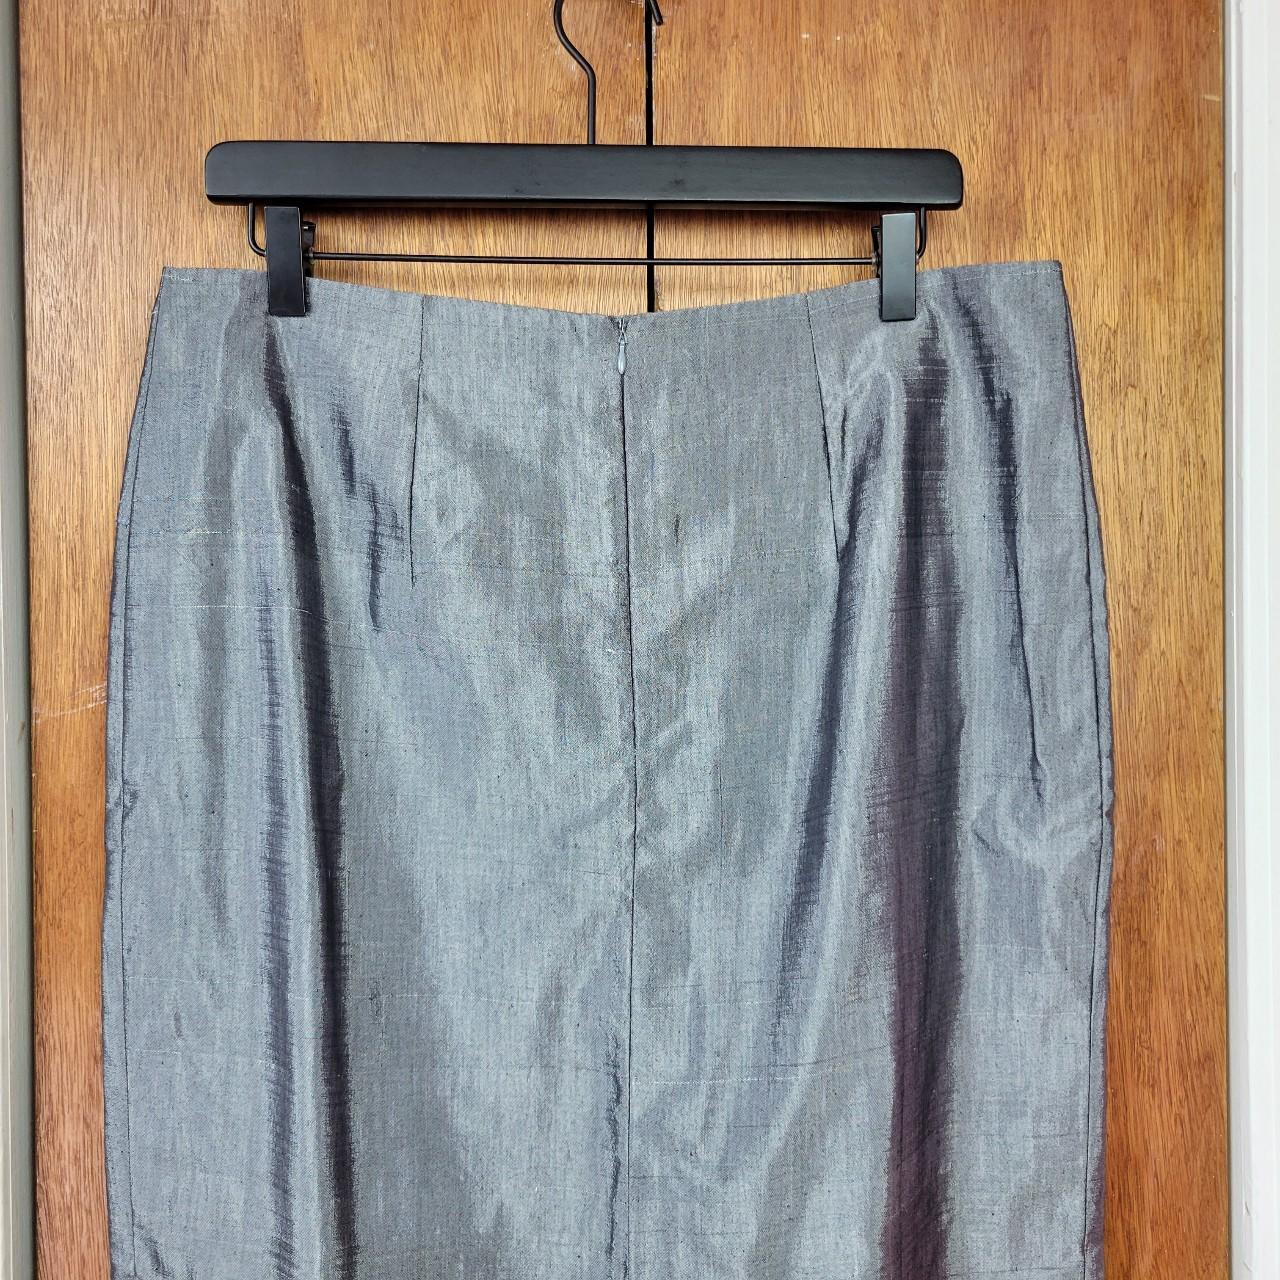 Product Image 4 - Handmade silver maxi skirt 🖤

Vintage